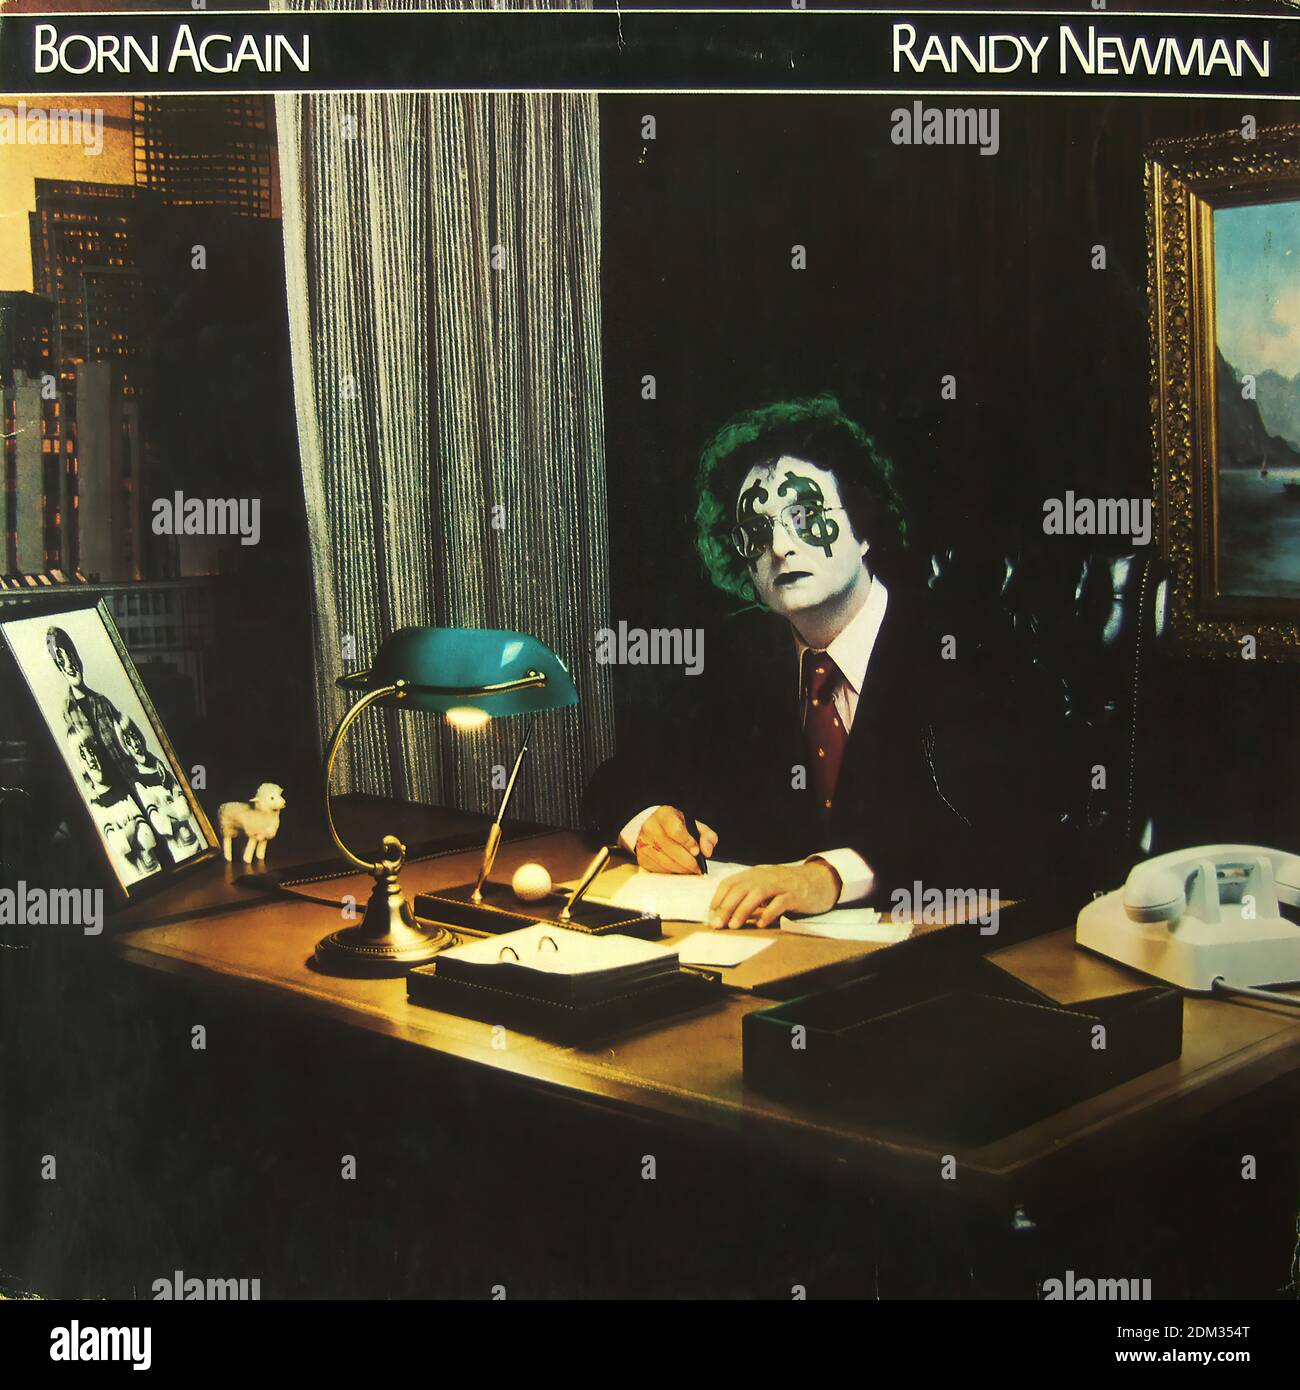 Randy Newman - Born Again - Vintage Vinyl Album Cover Stockfoto